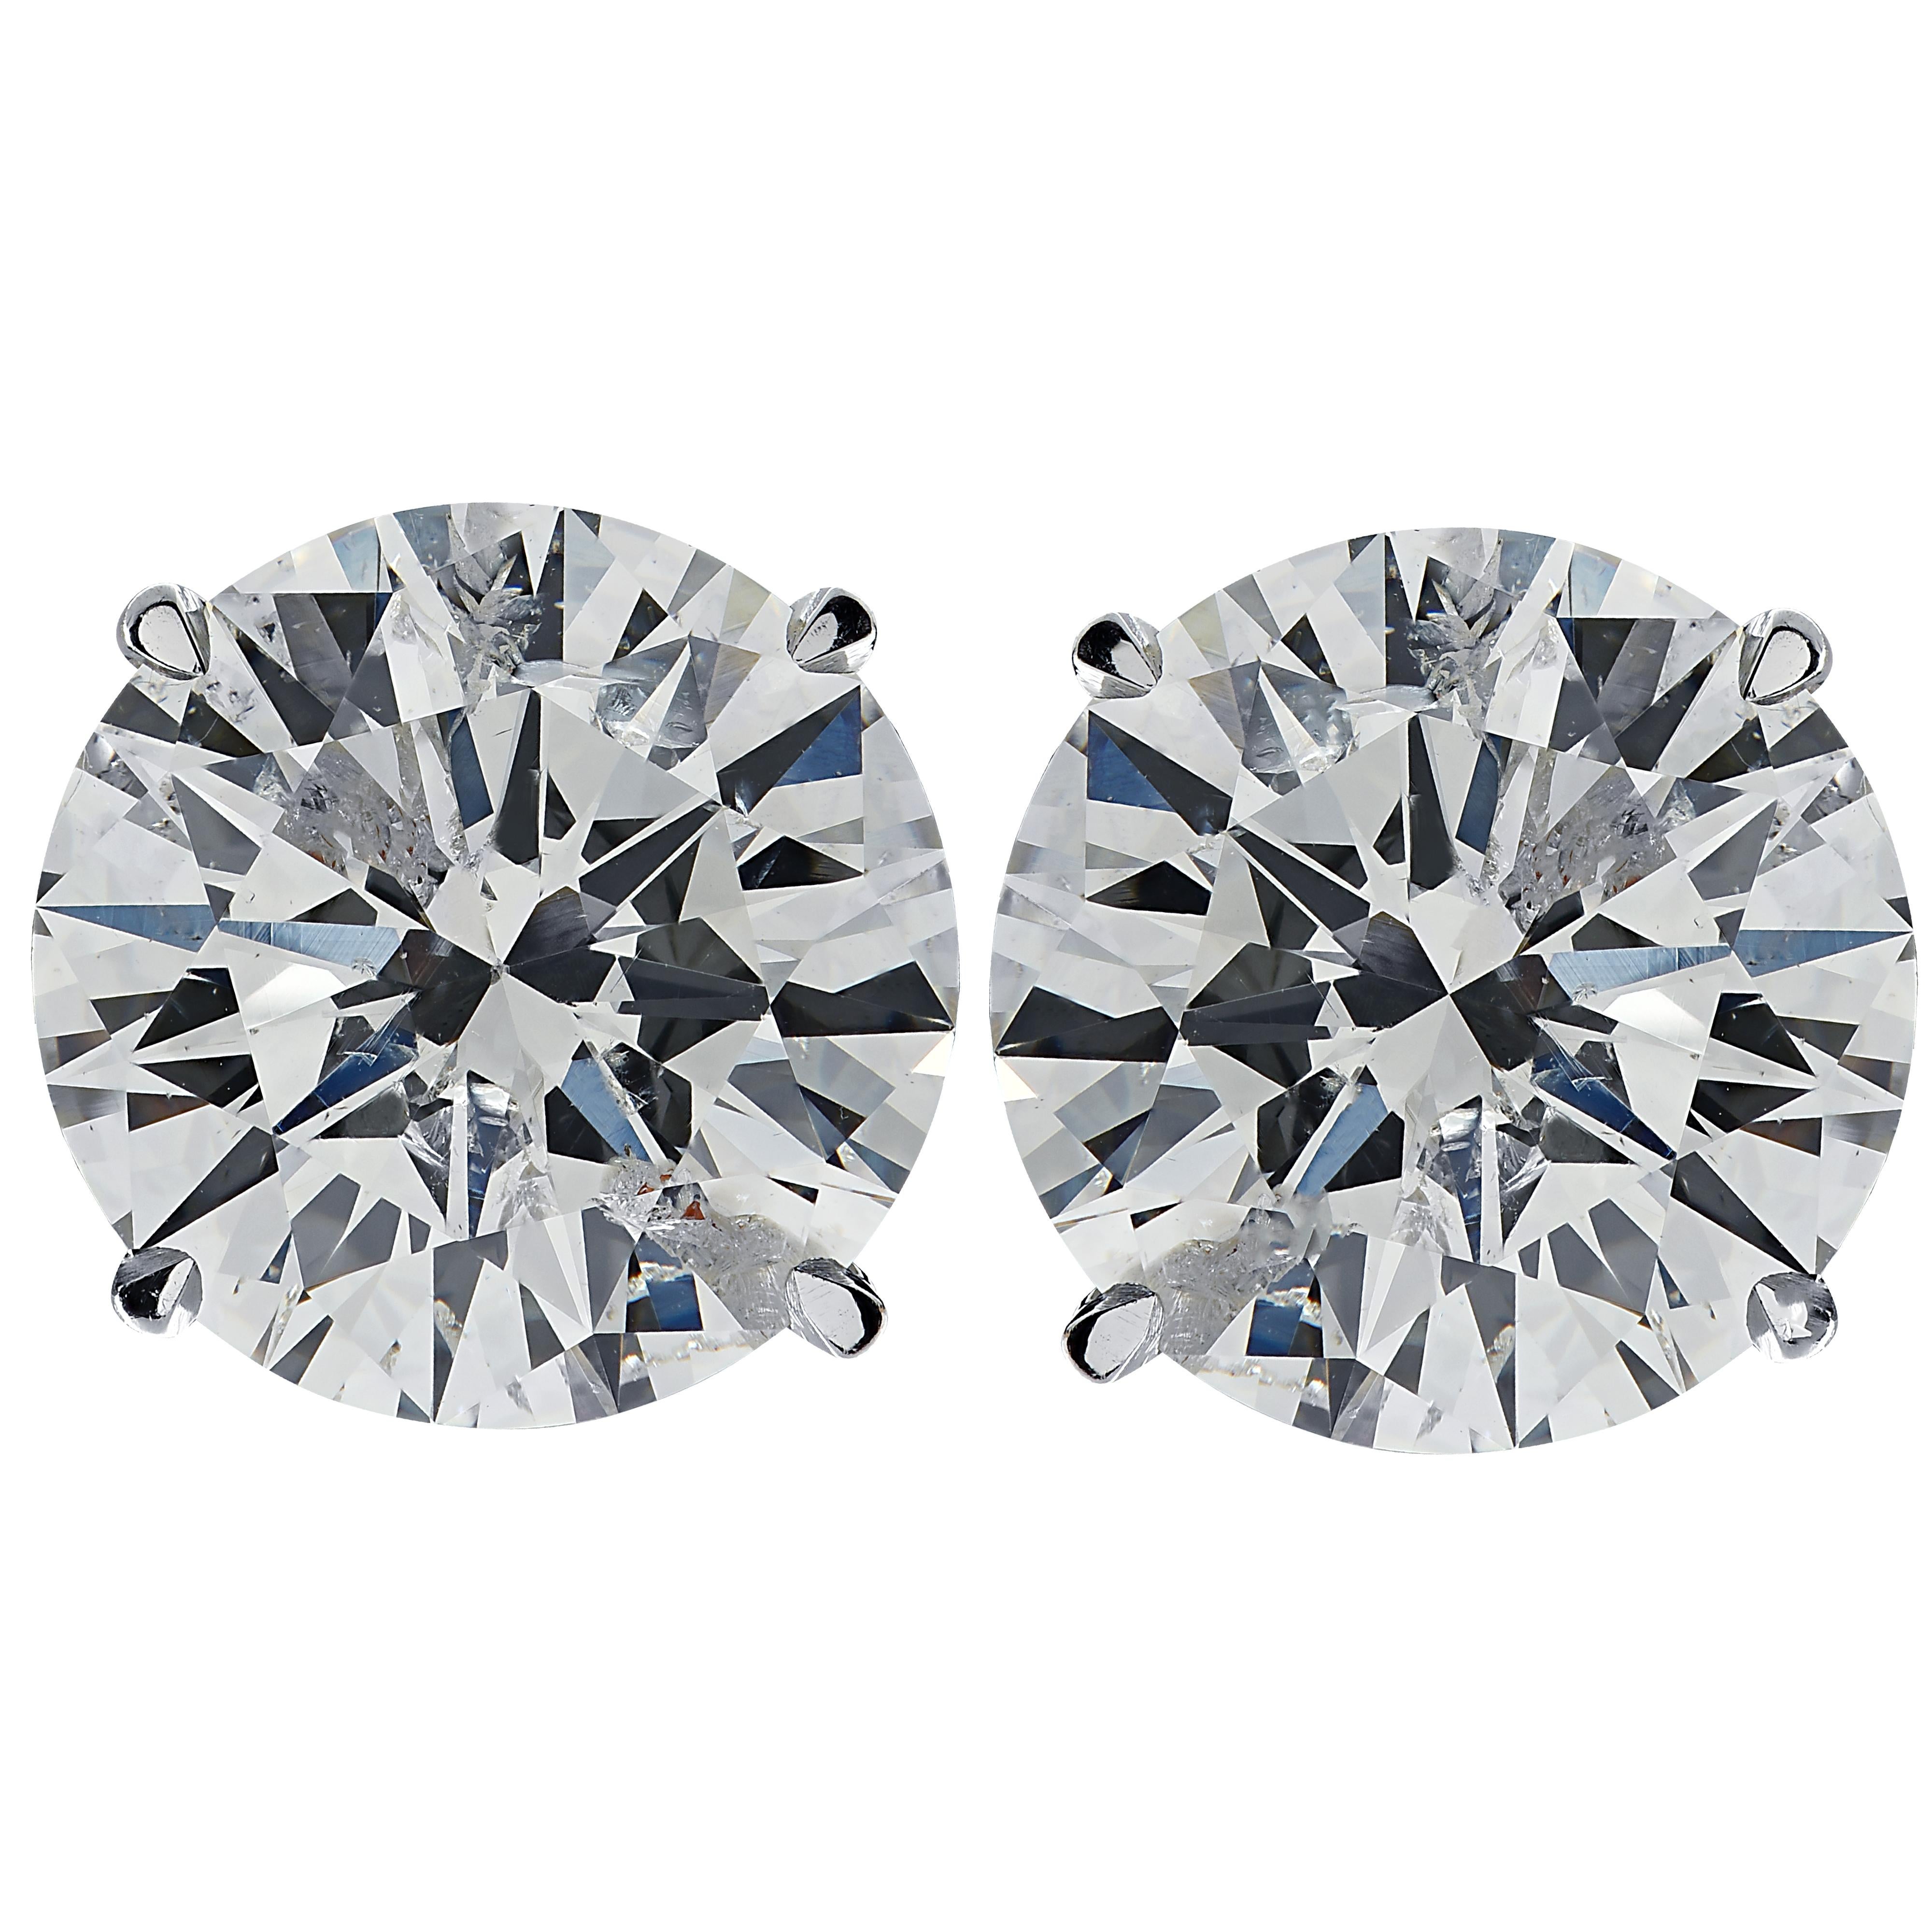 Round Cut Vivid Diamonds GIA Certified 3.01 Carat Diamond Solitaire Stud Earrings For Sale